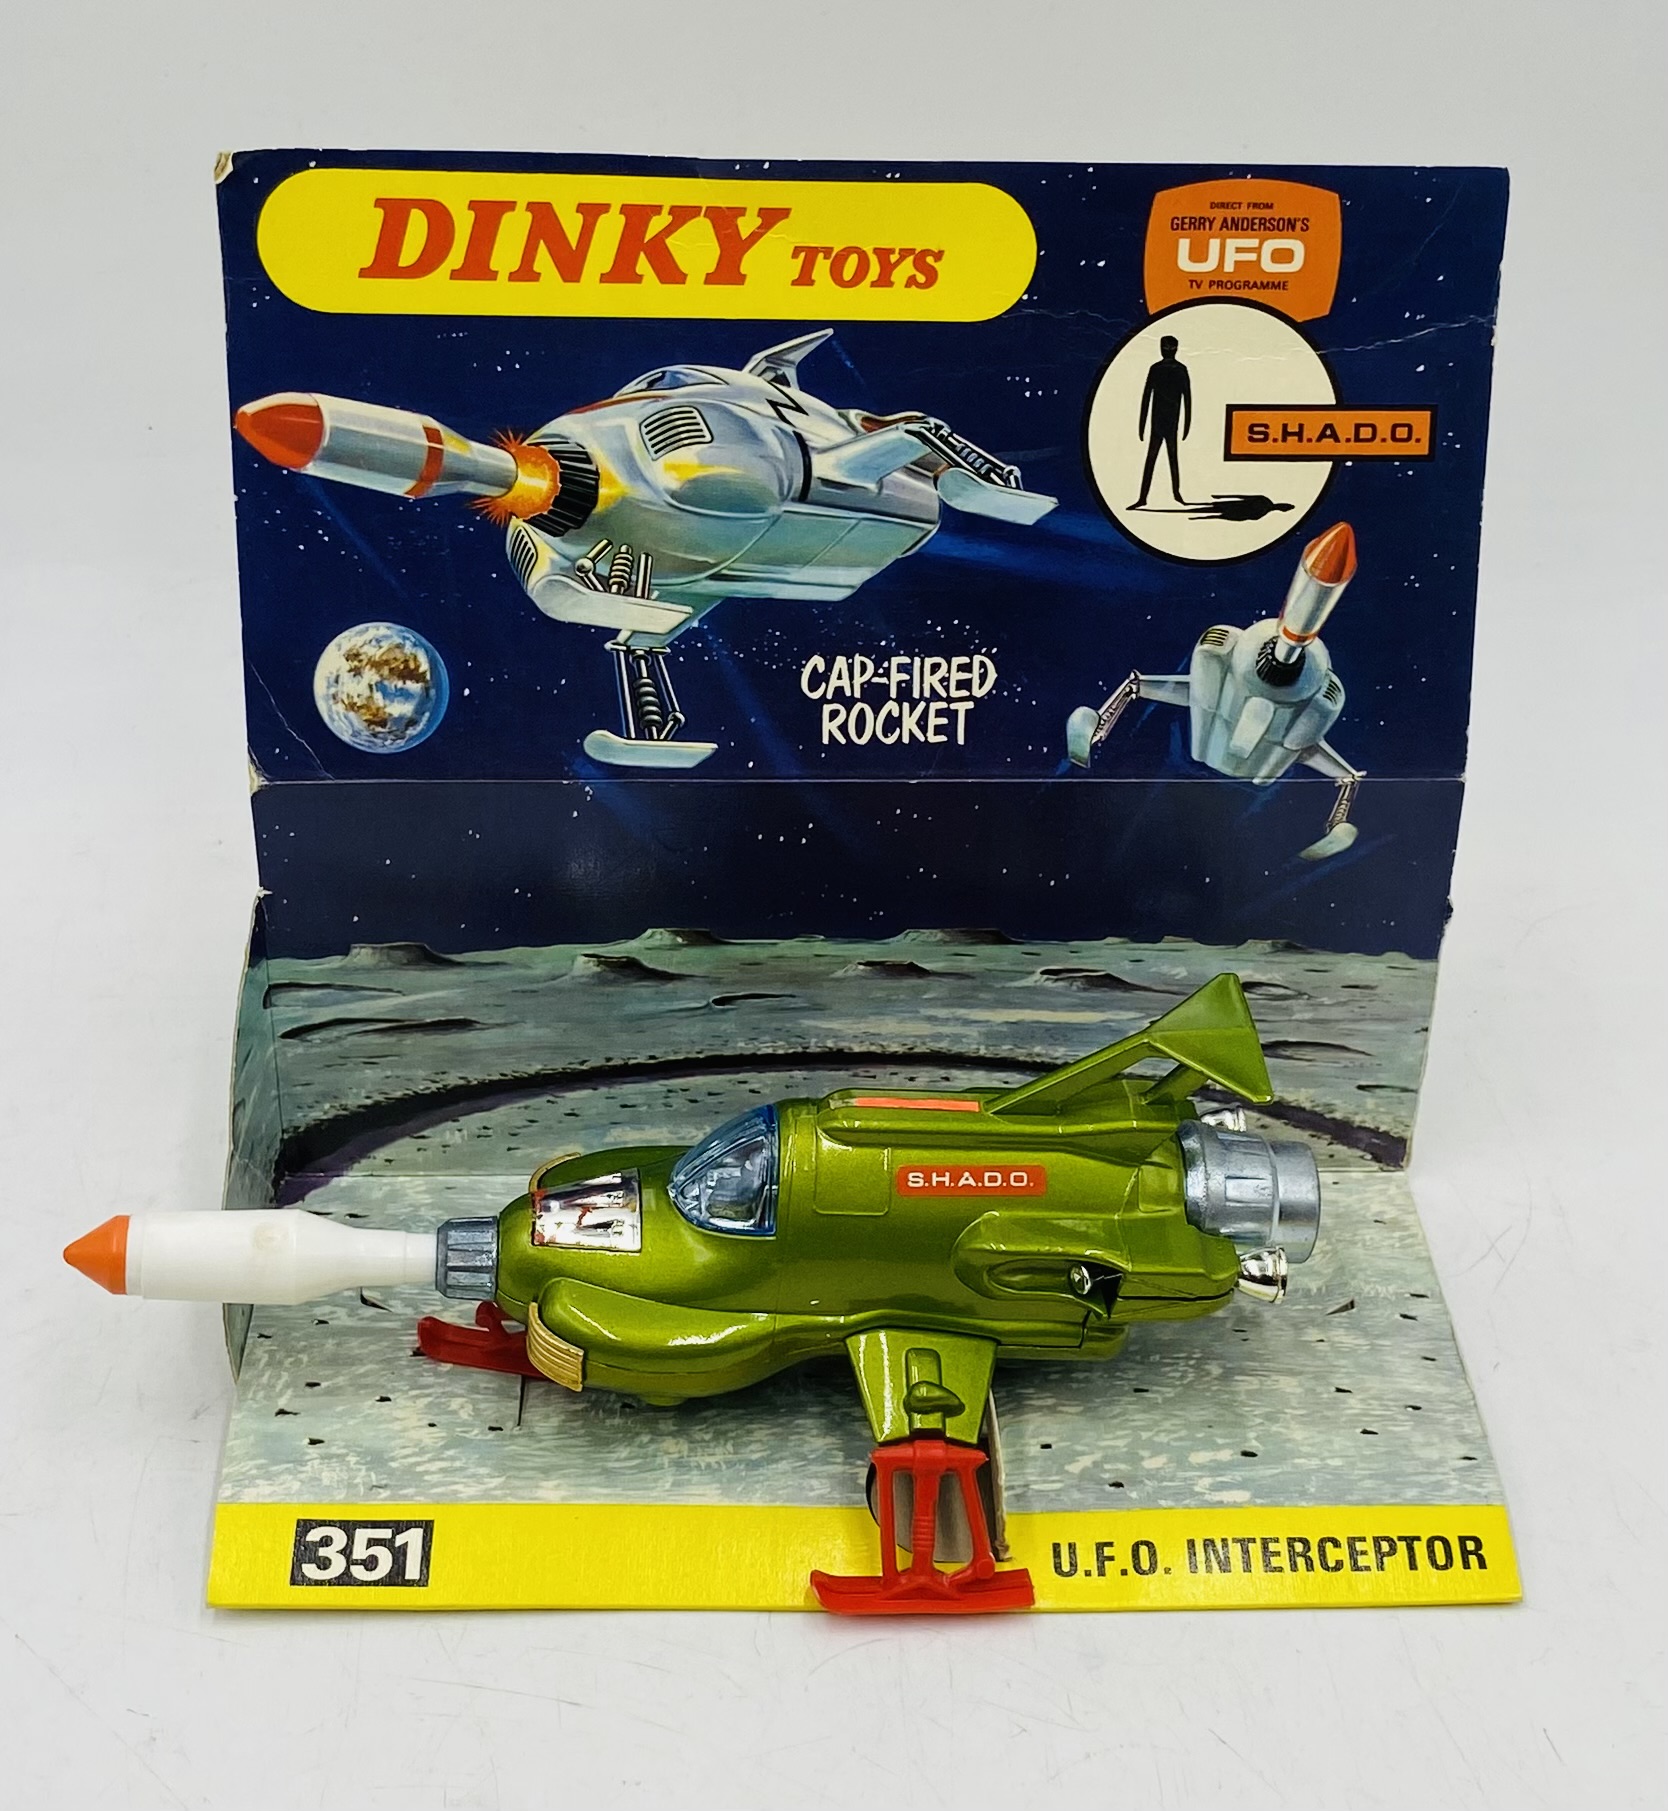 A vintage boxed Dinky Toys "U.F.O. Interceptor" die-cast model (No 351) - Image 2 of 8